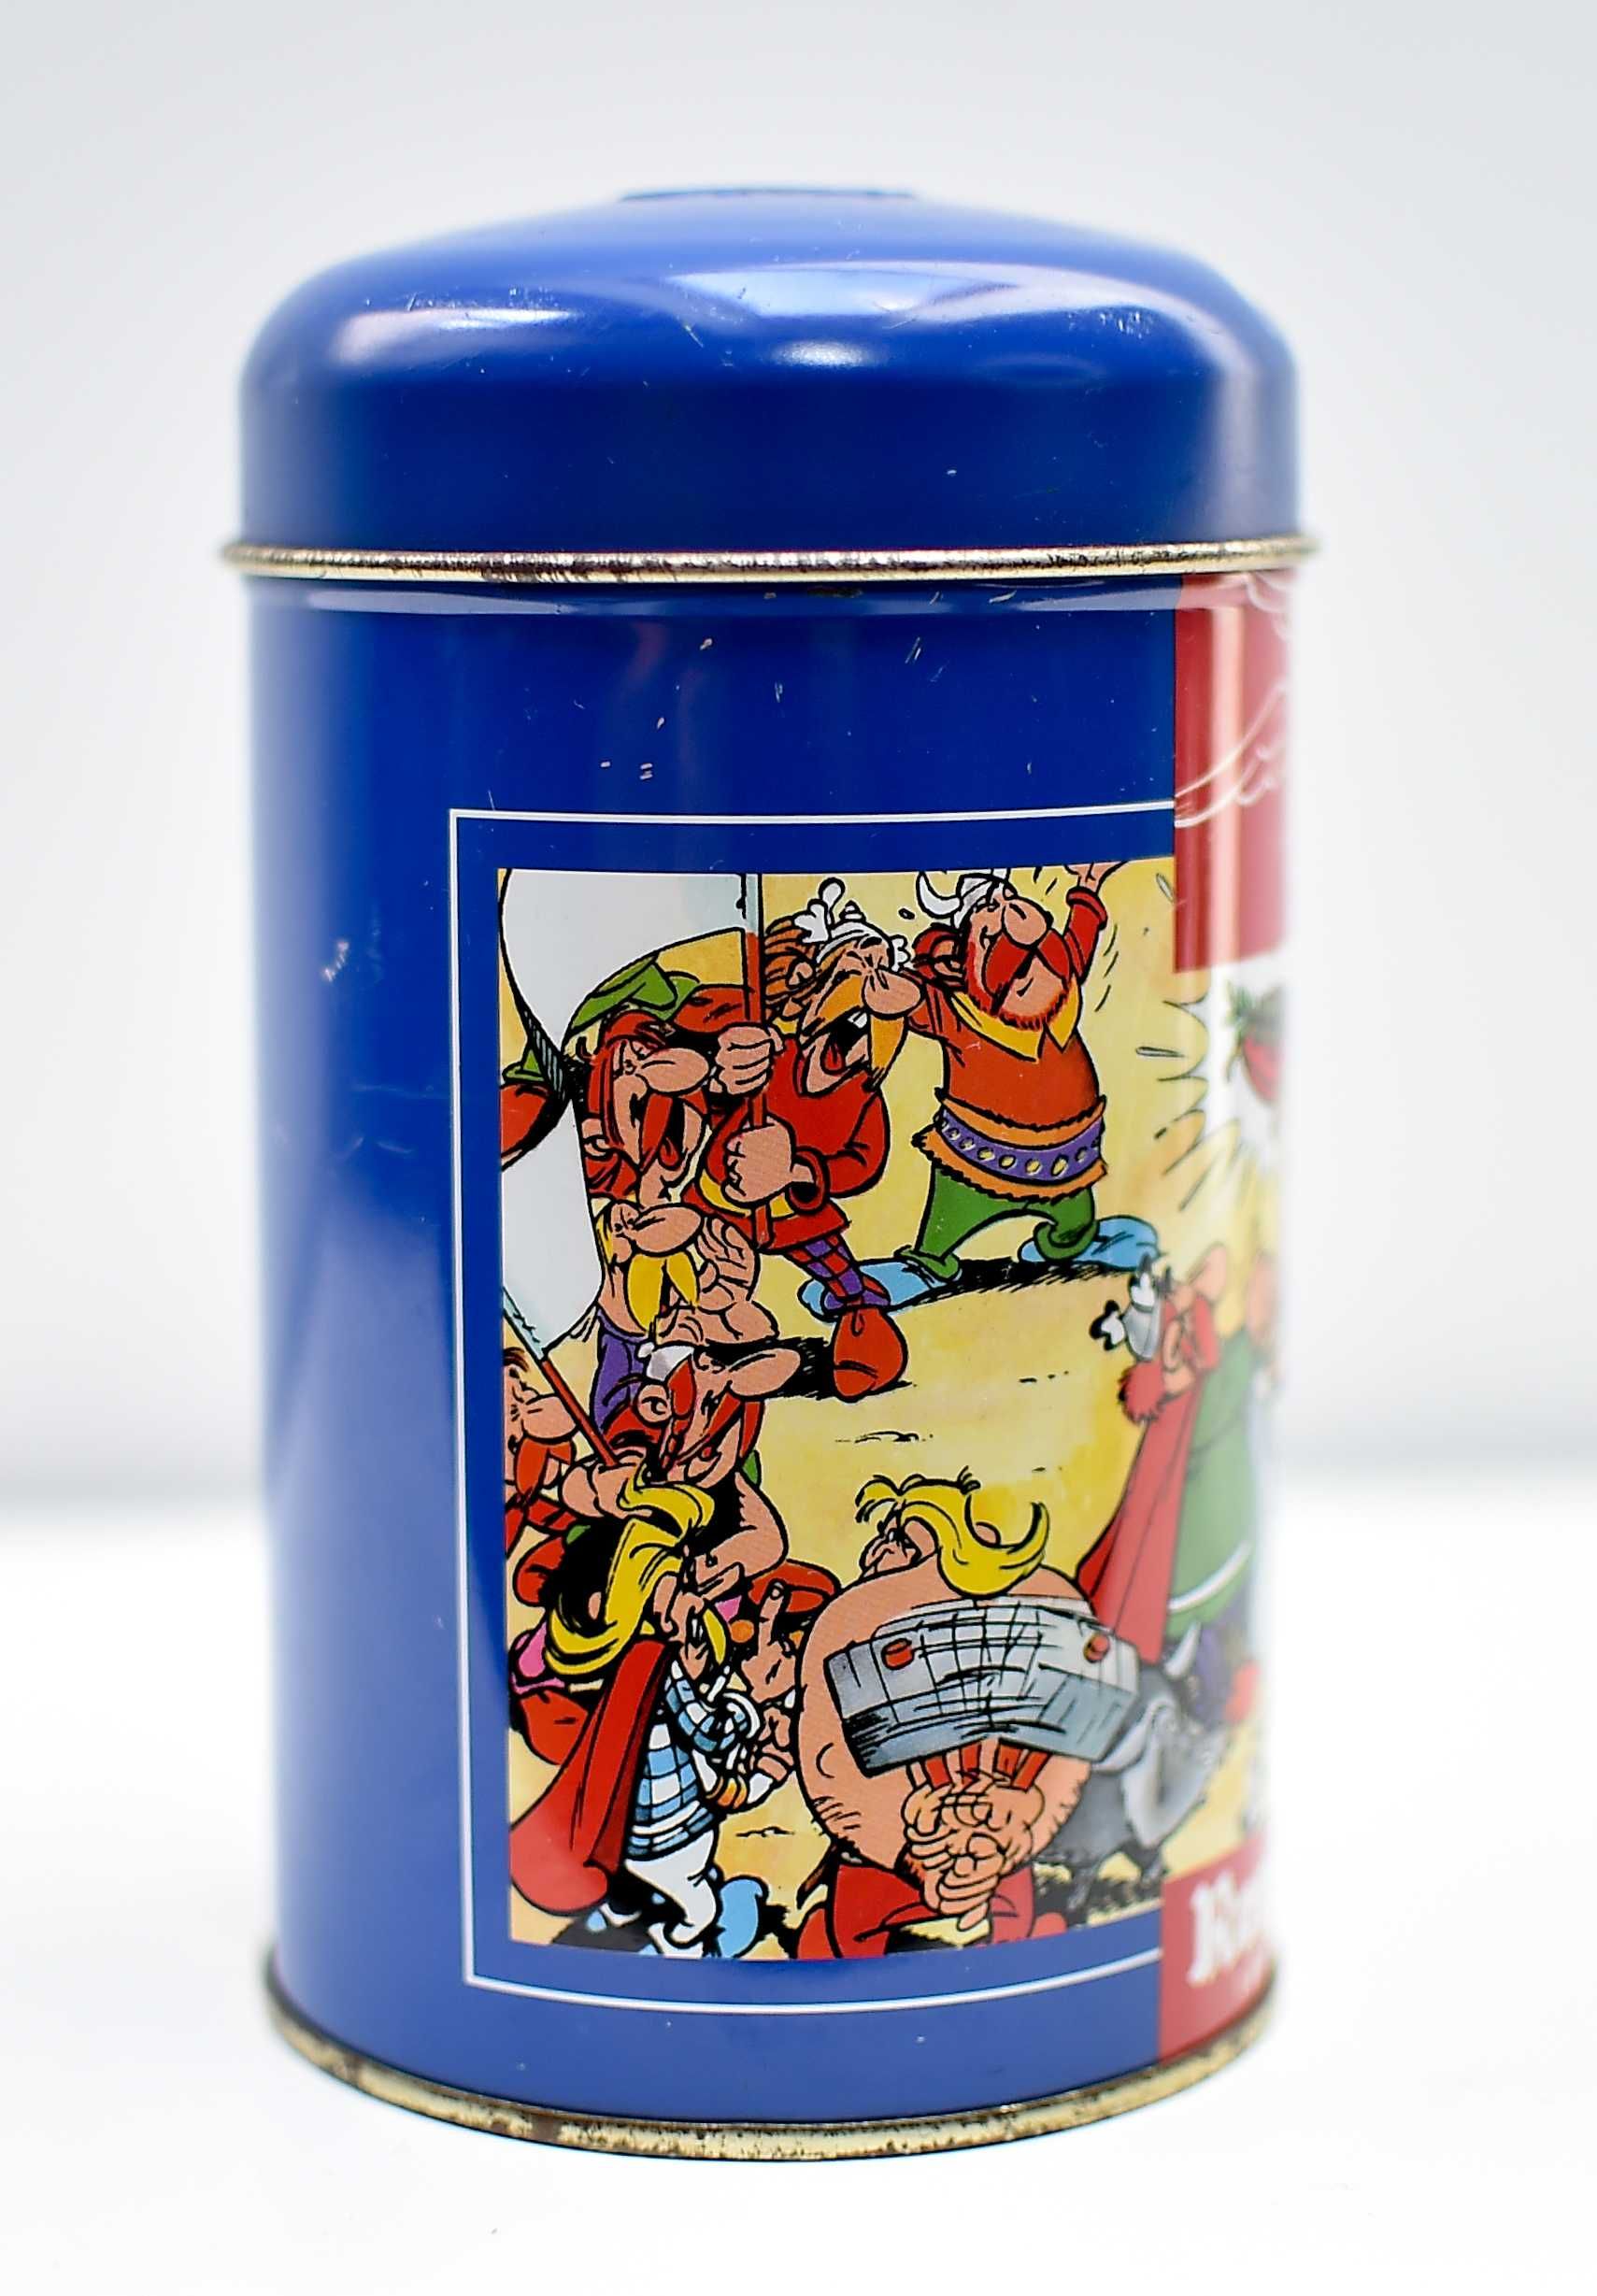 Pudełko Metalowe Asterix Rombouts 1996